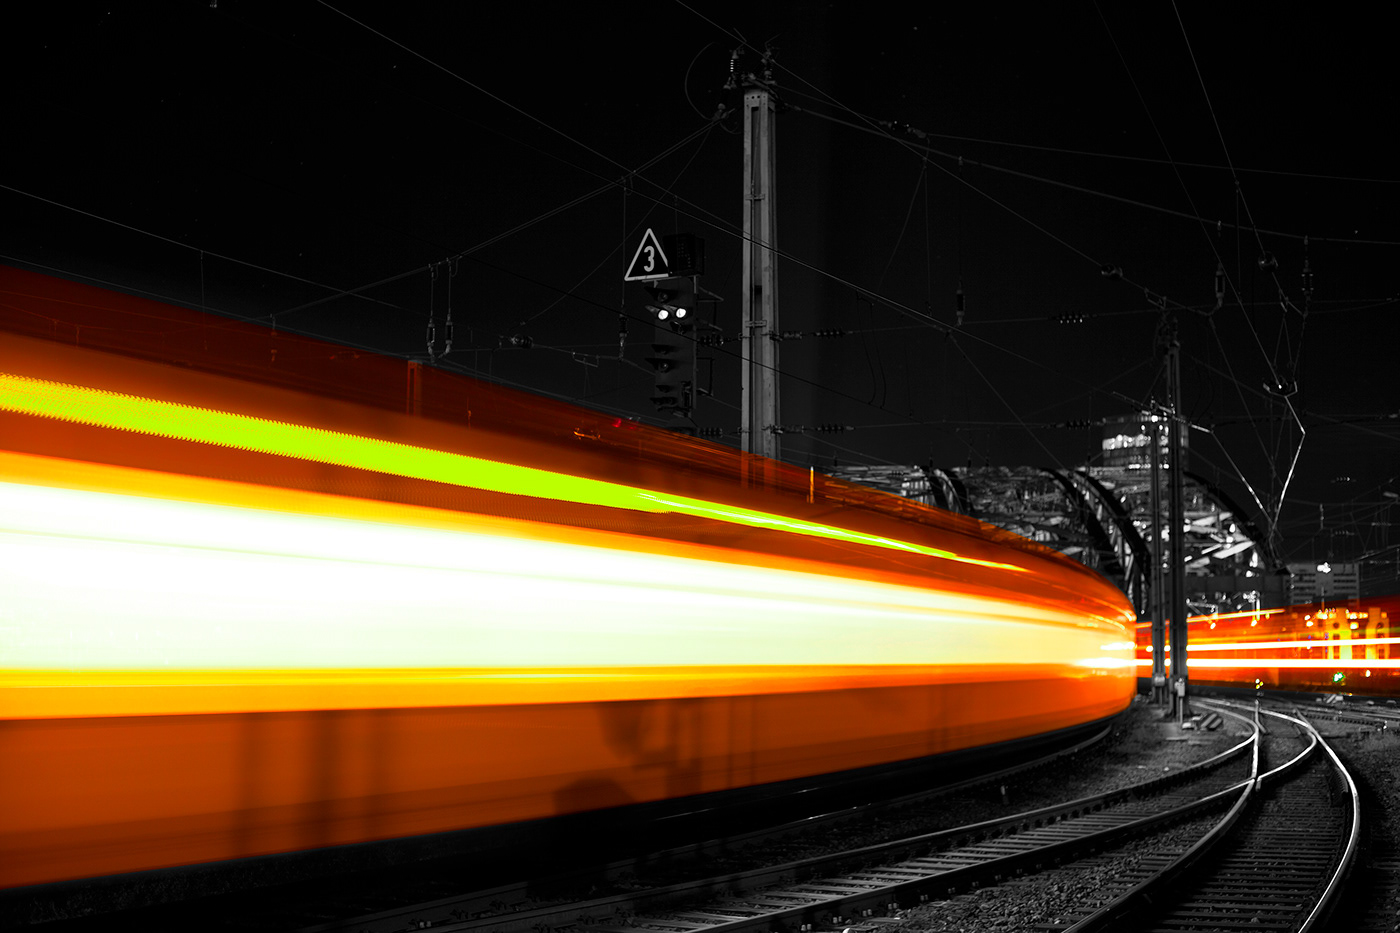 graphicdesign Grafikdesign fotografie Photography  photos longexposure trains design nightphotography urbanspace